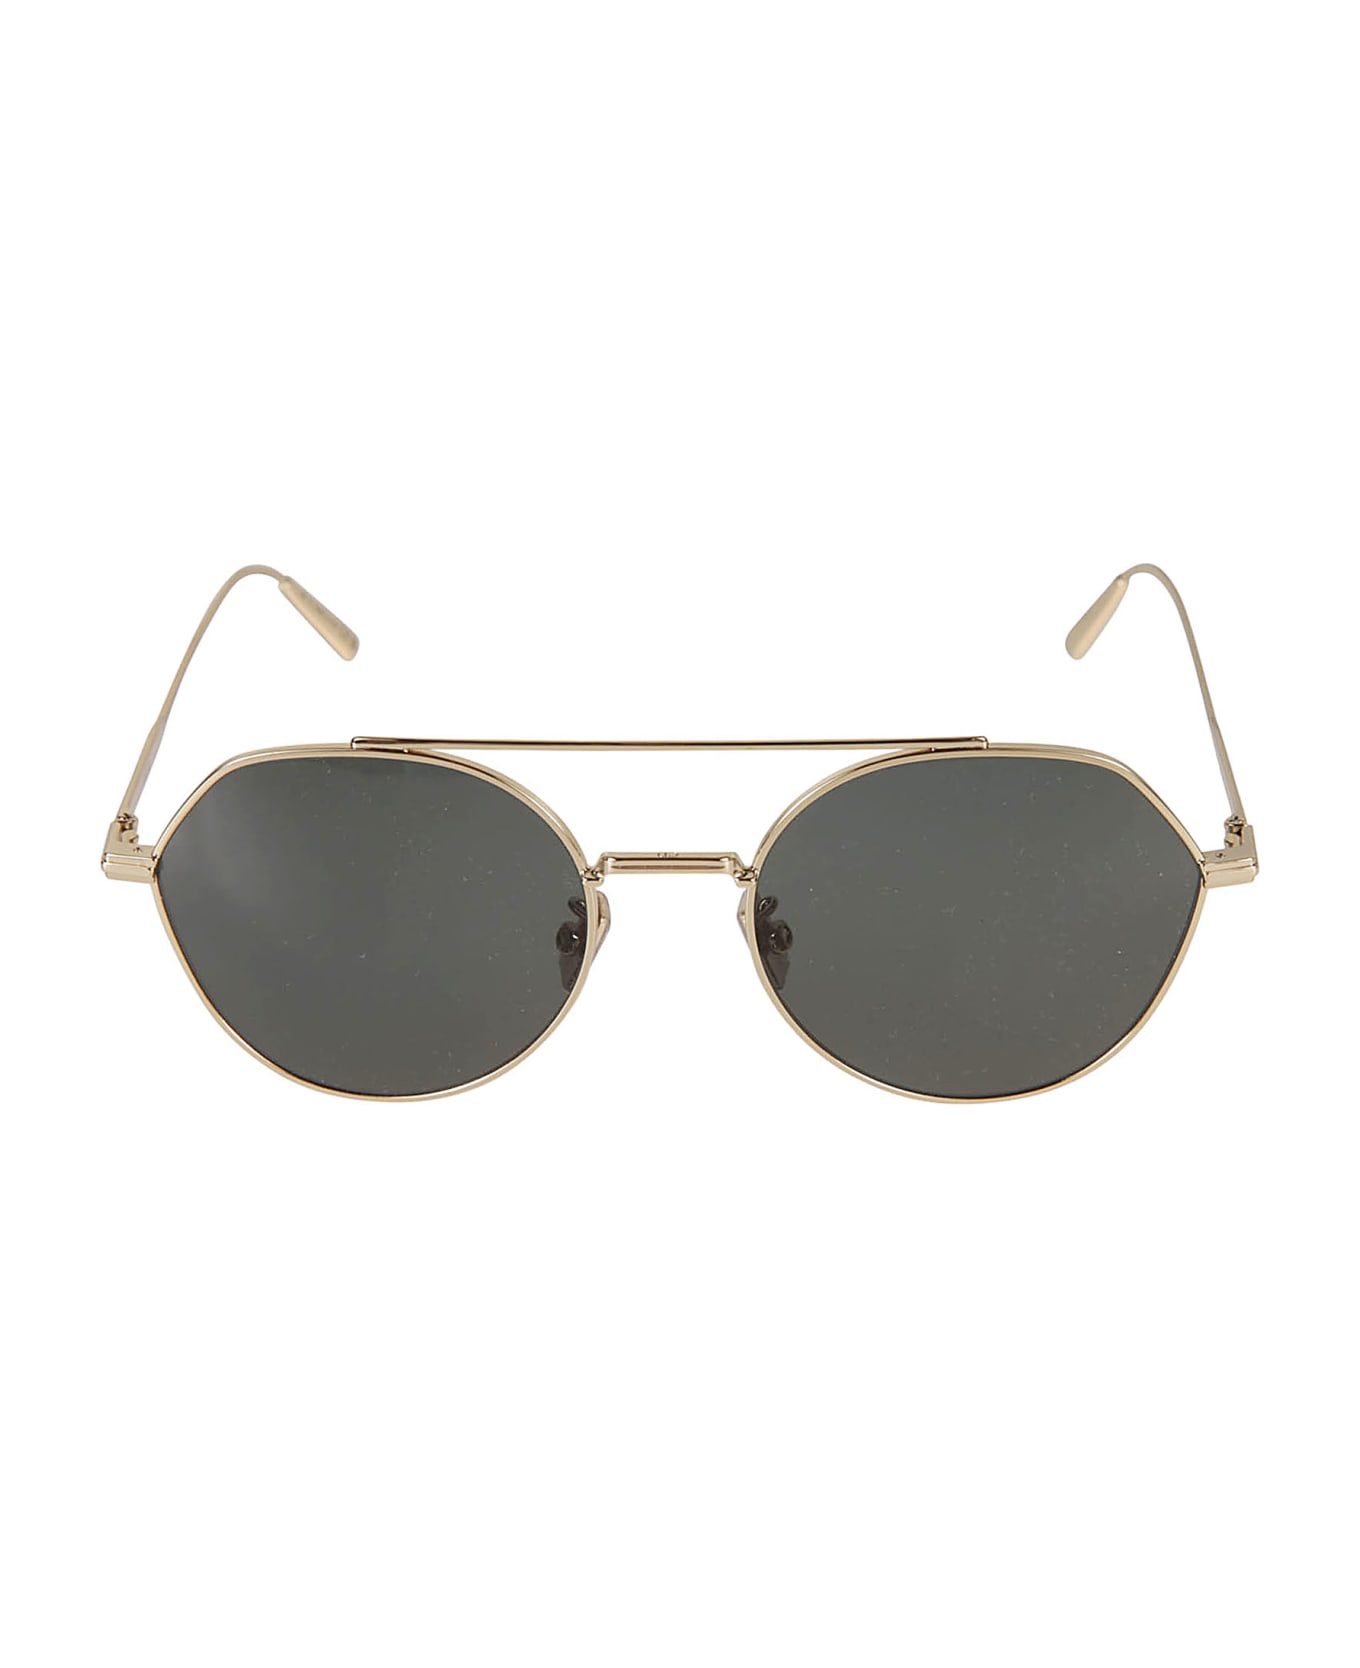 Dior Eyewear Blacksuit Sunglasses - b0c0